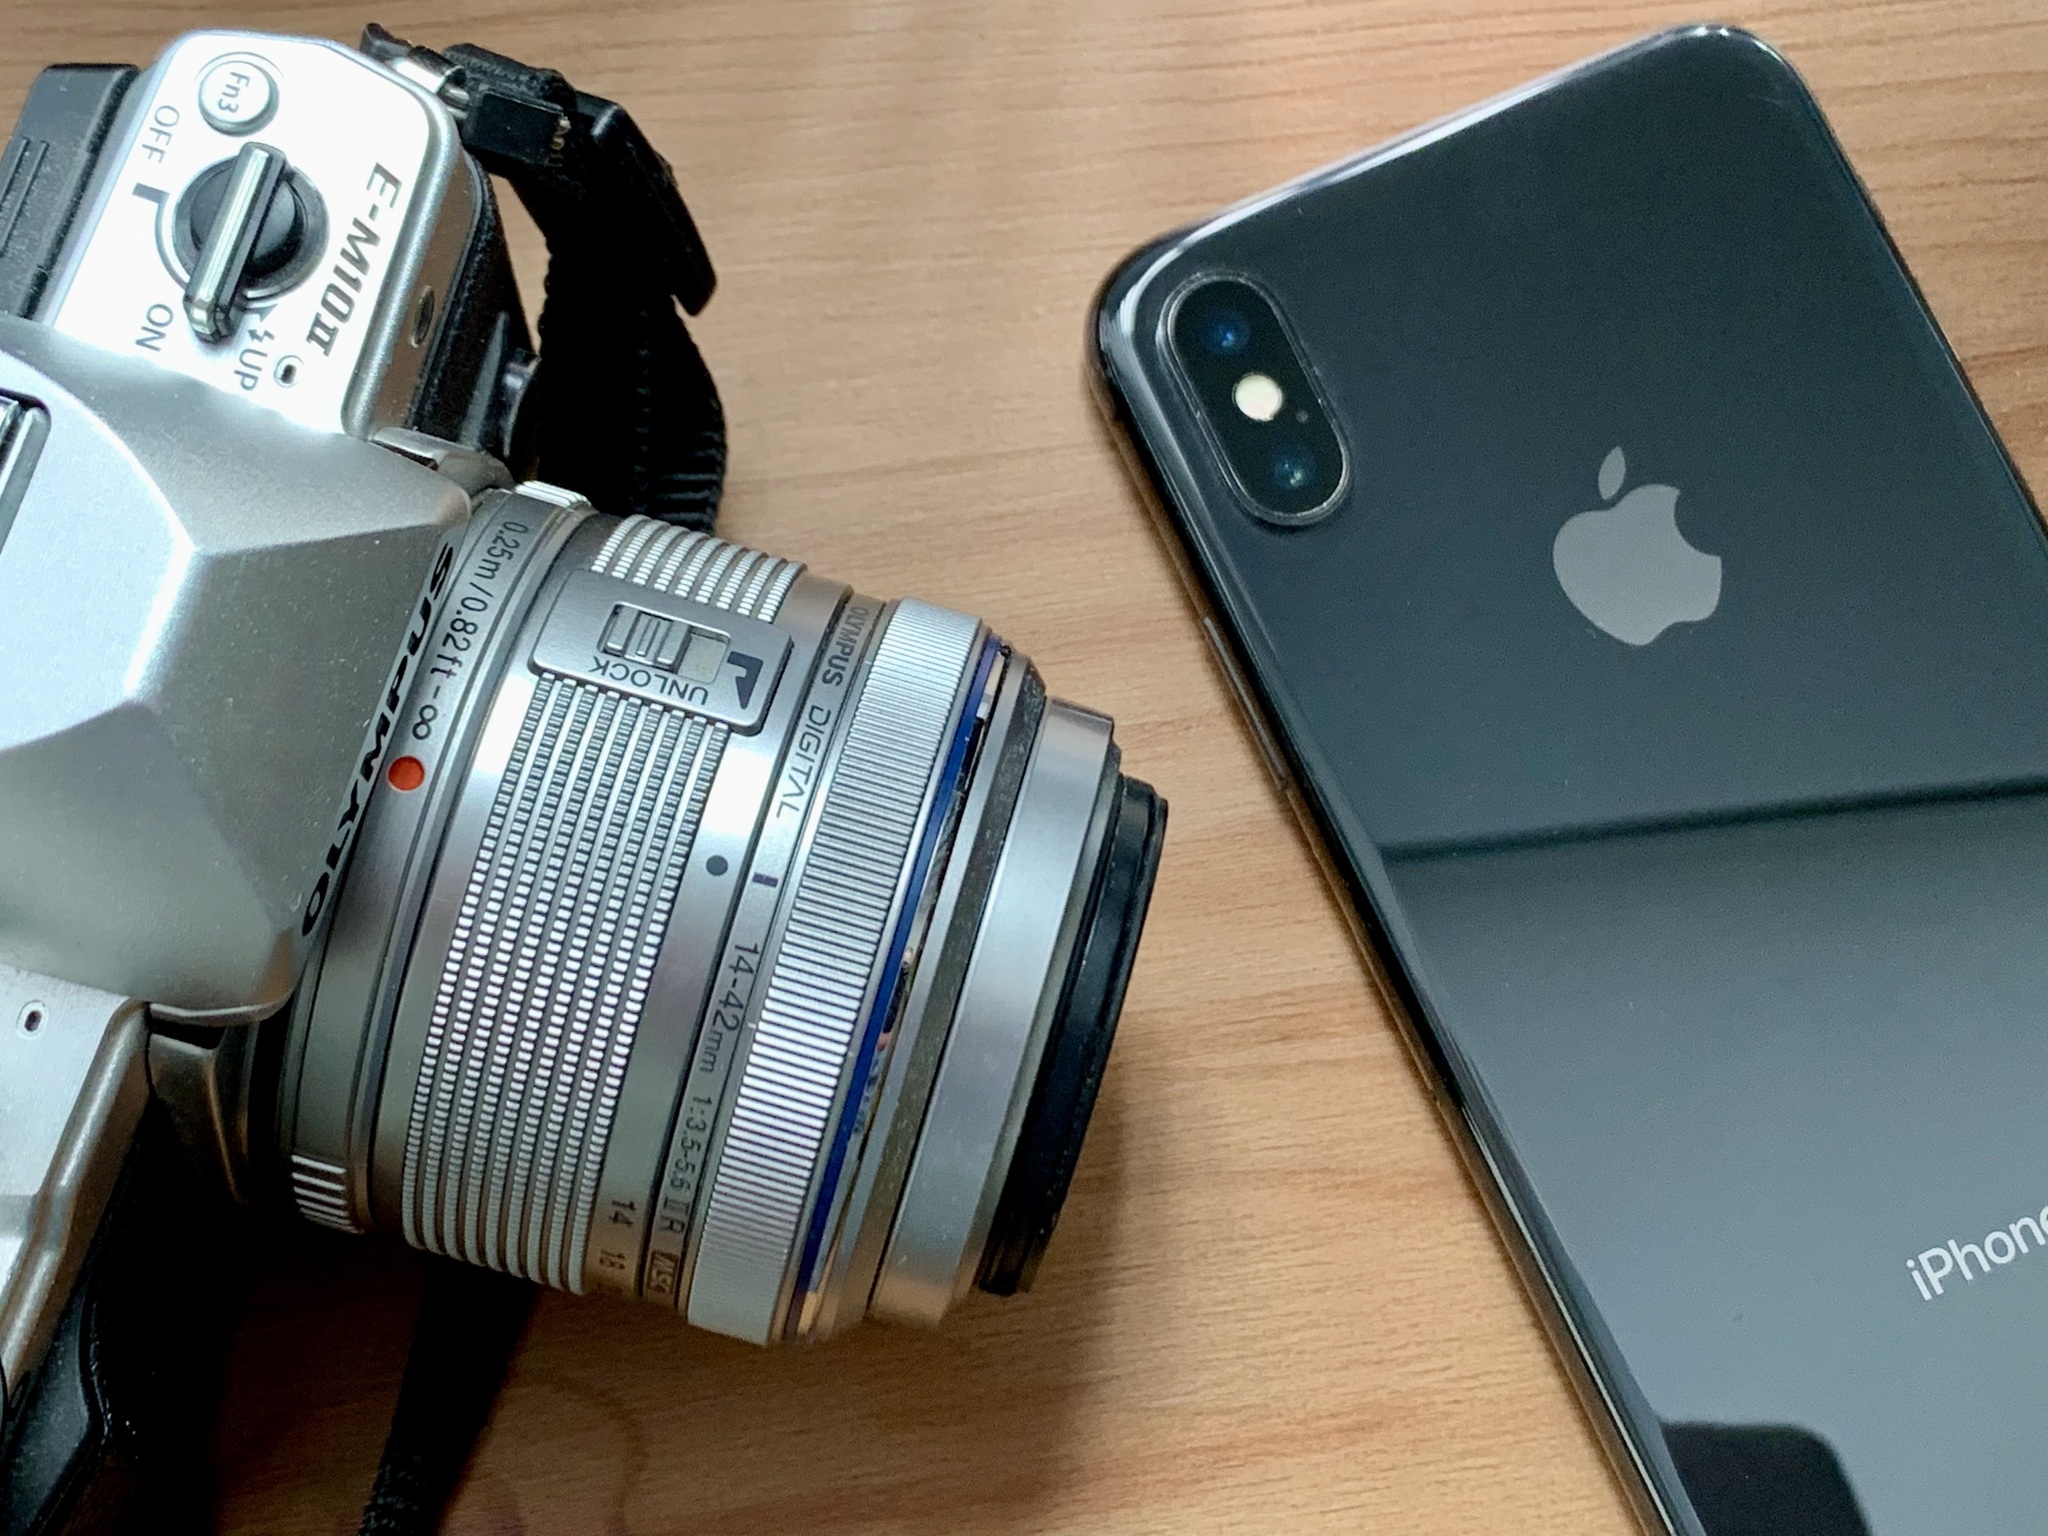 Digital Camera vs. iPhone